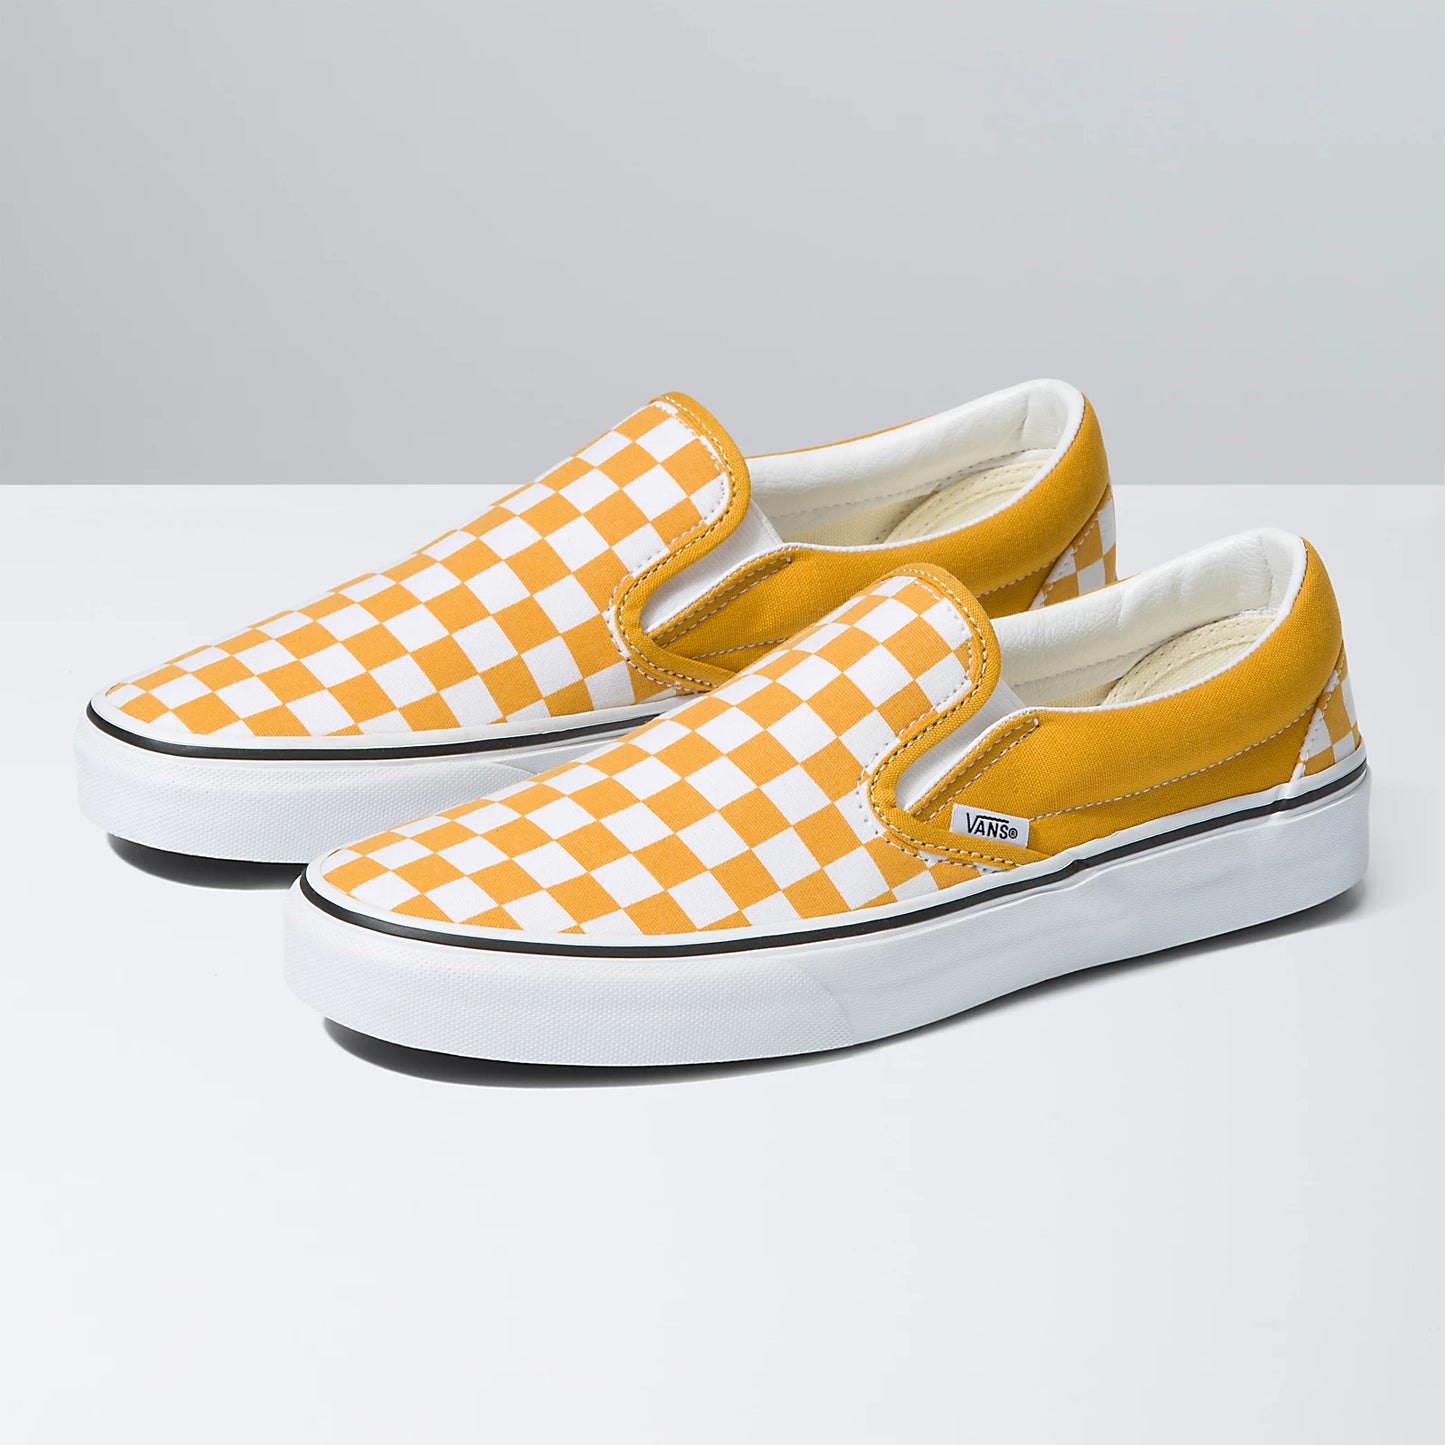 Original Vans Classic Slip On - Theory Checkerboard Golden Yellow